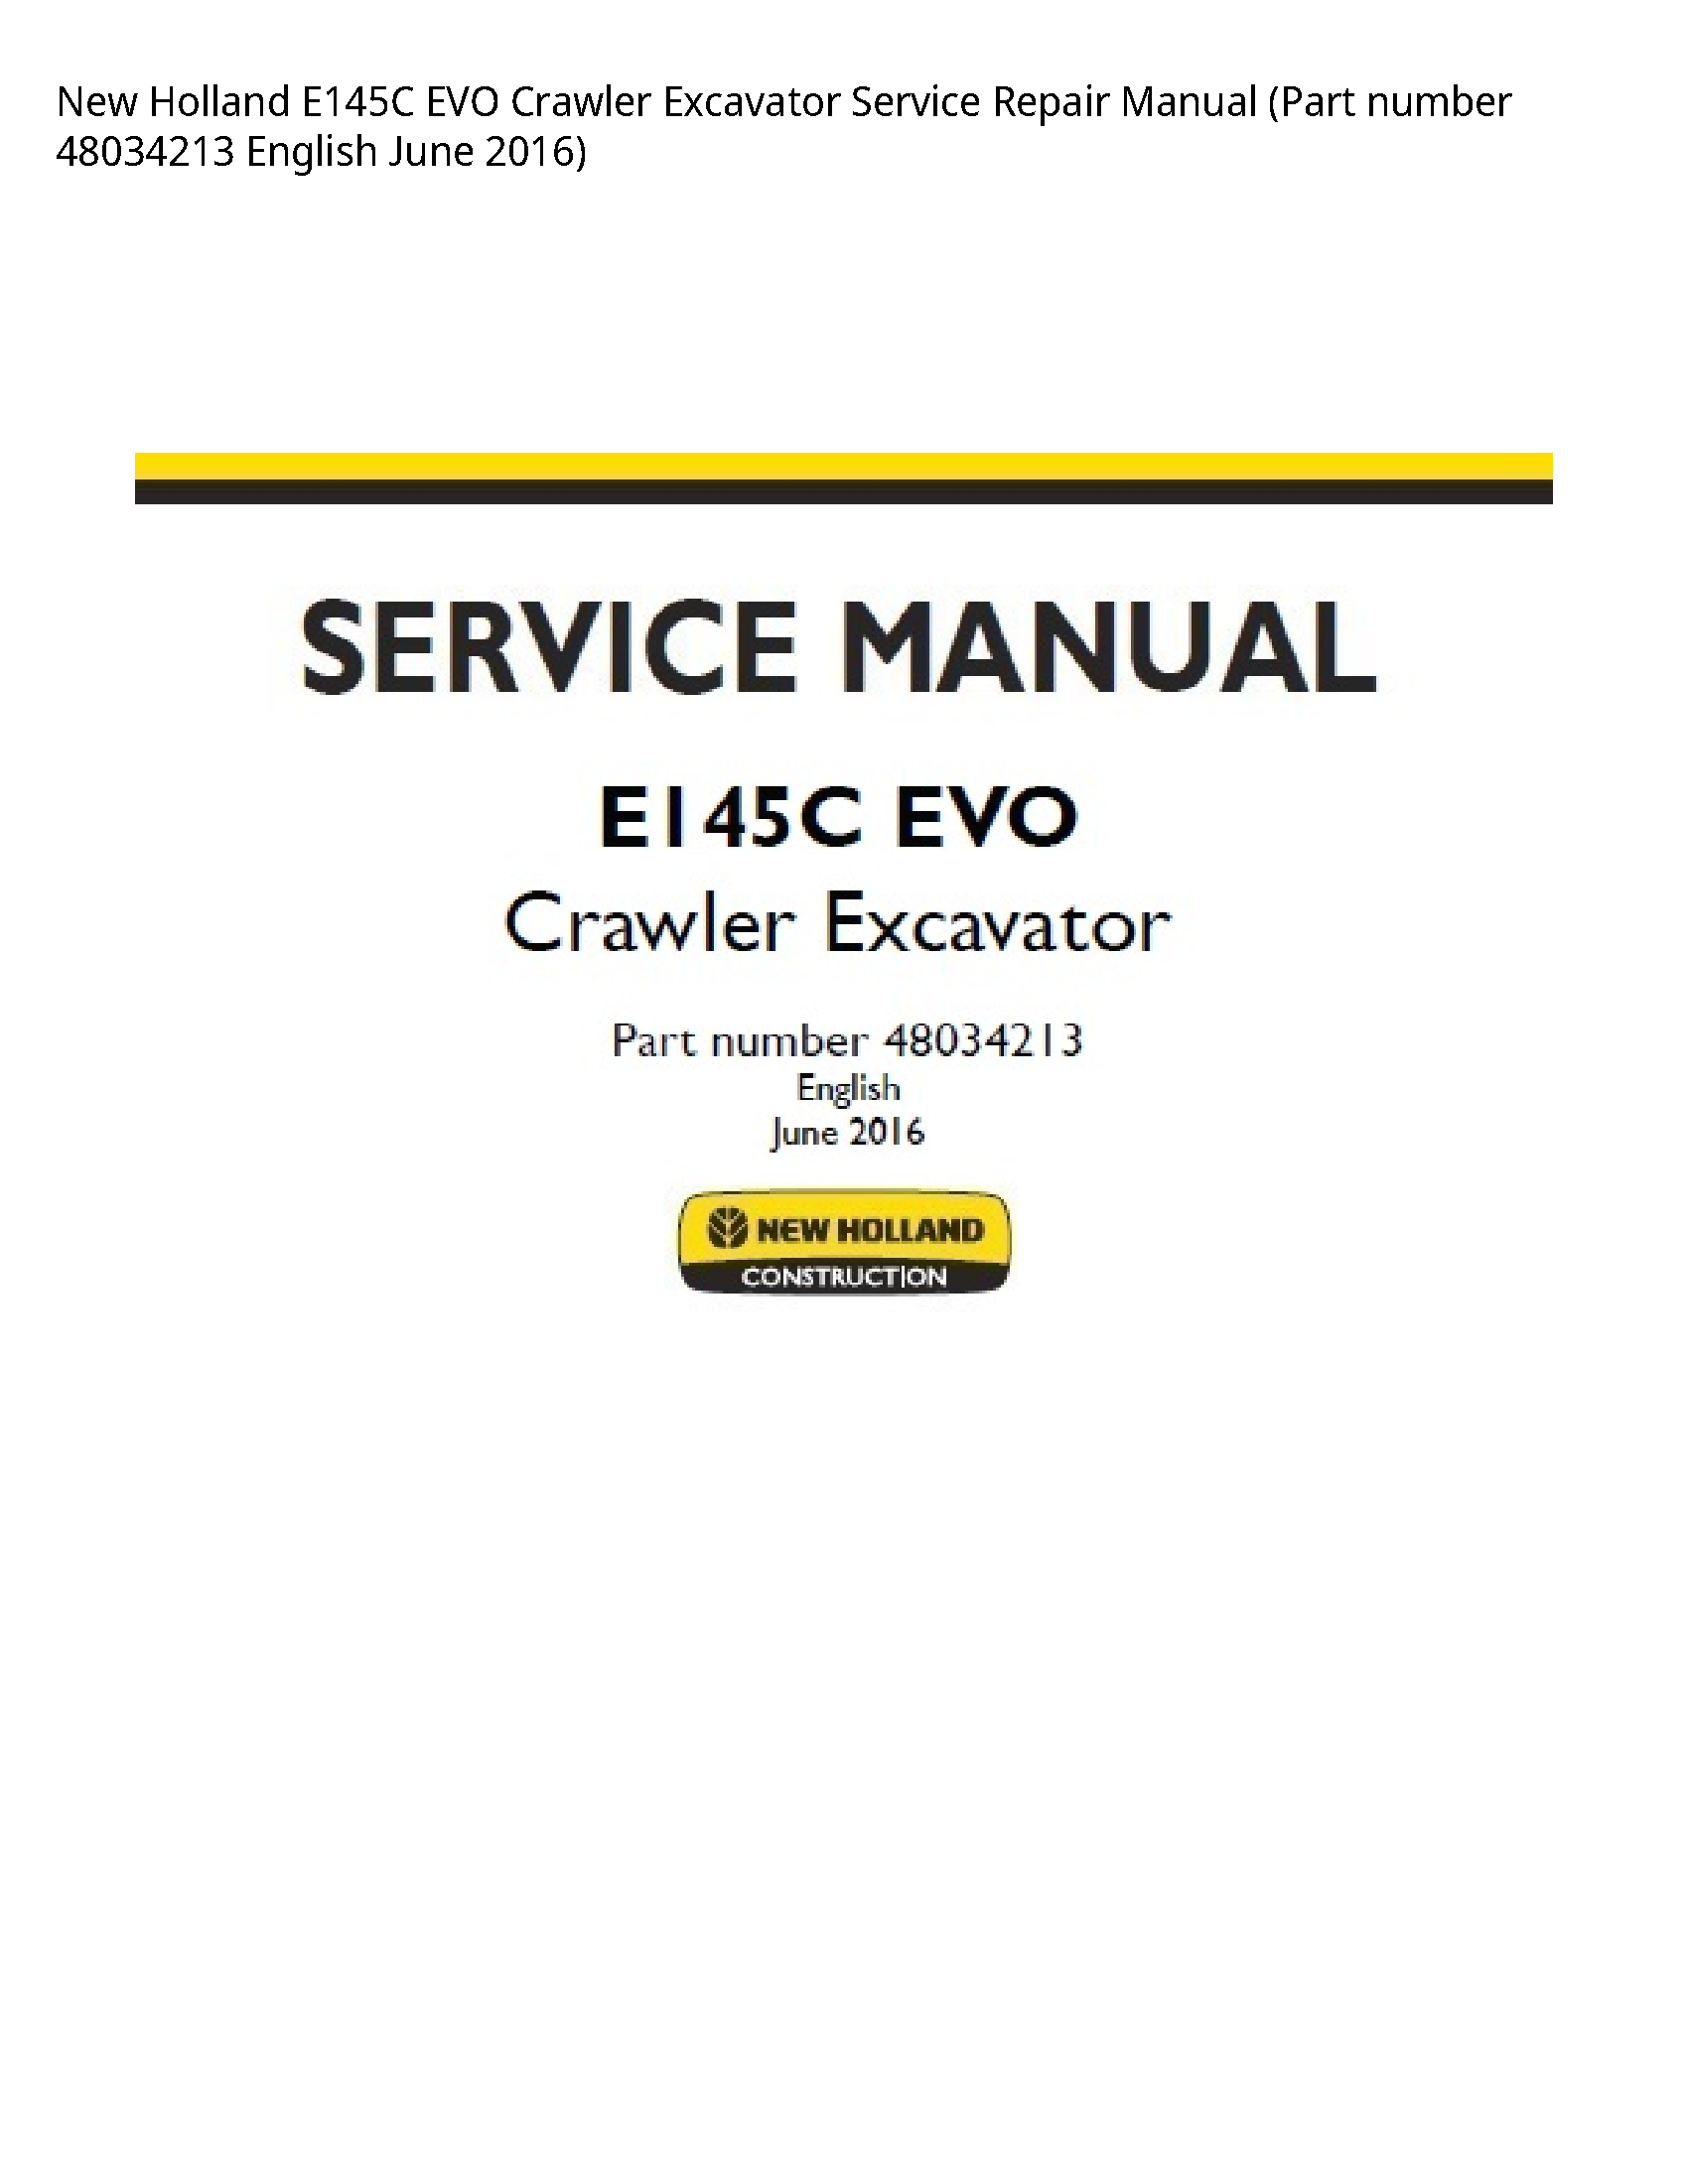 New Holland E145C EVO Crawler Excavator manual